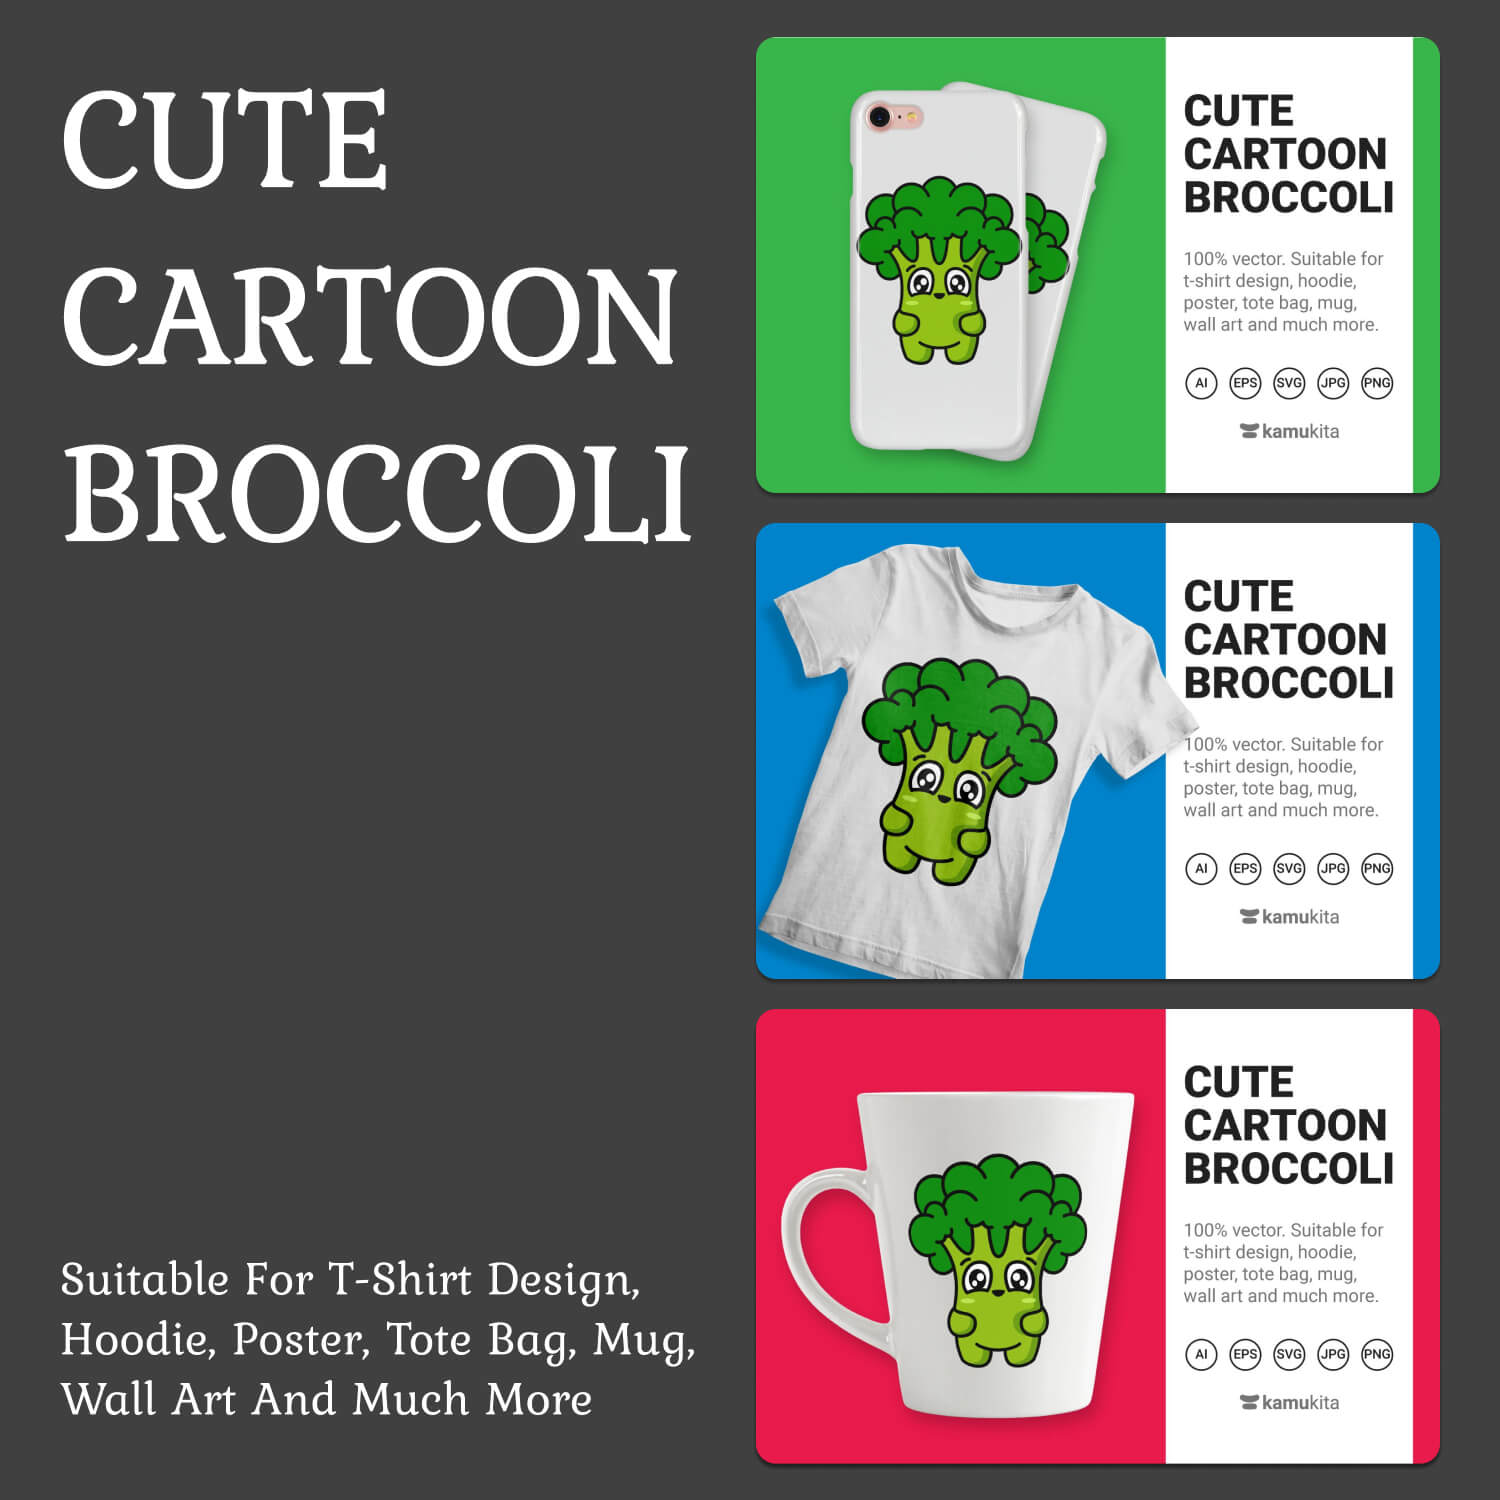 Cute Cartoon Broccoli.